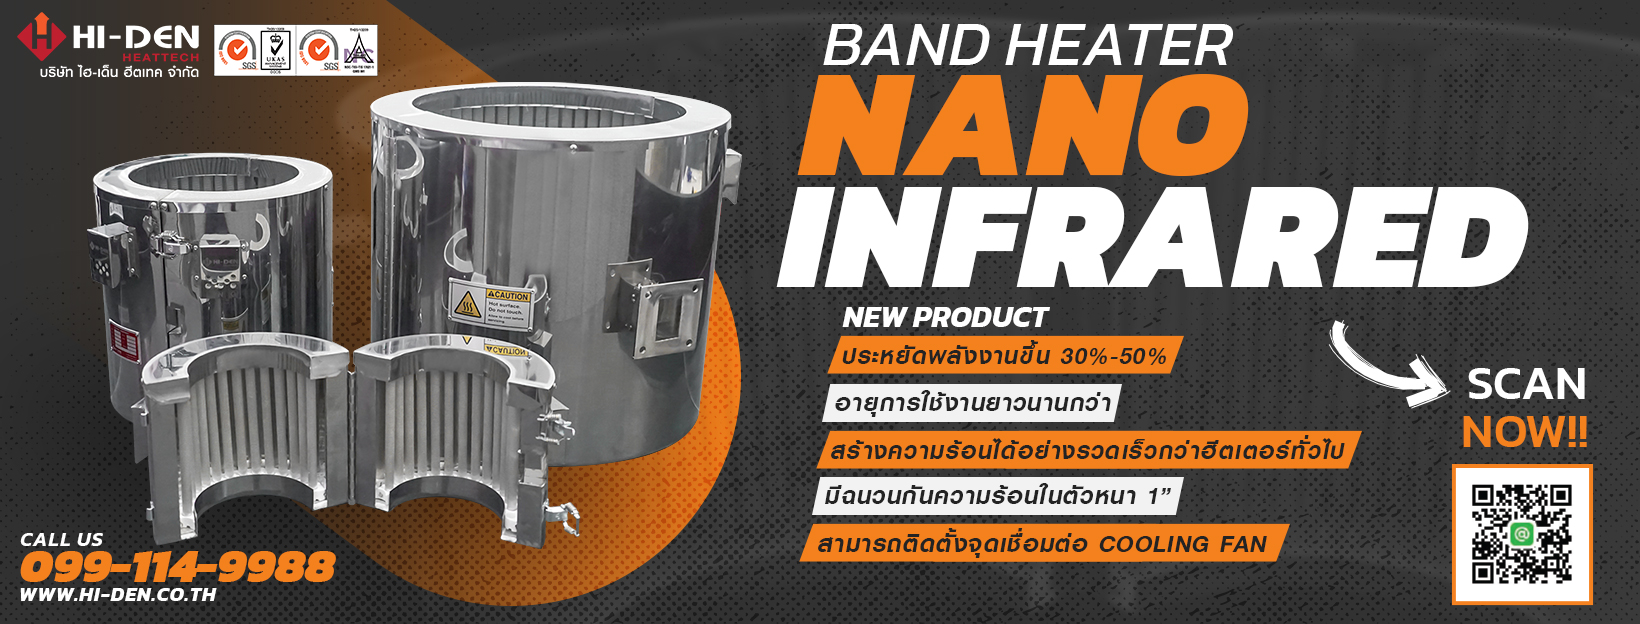 Band Heater Nano Infrared